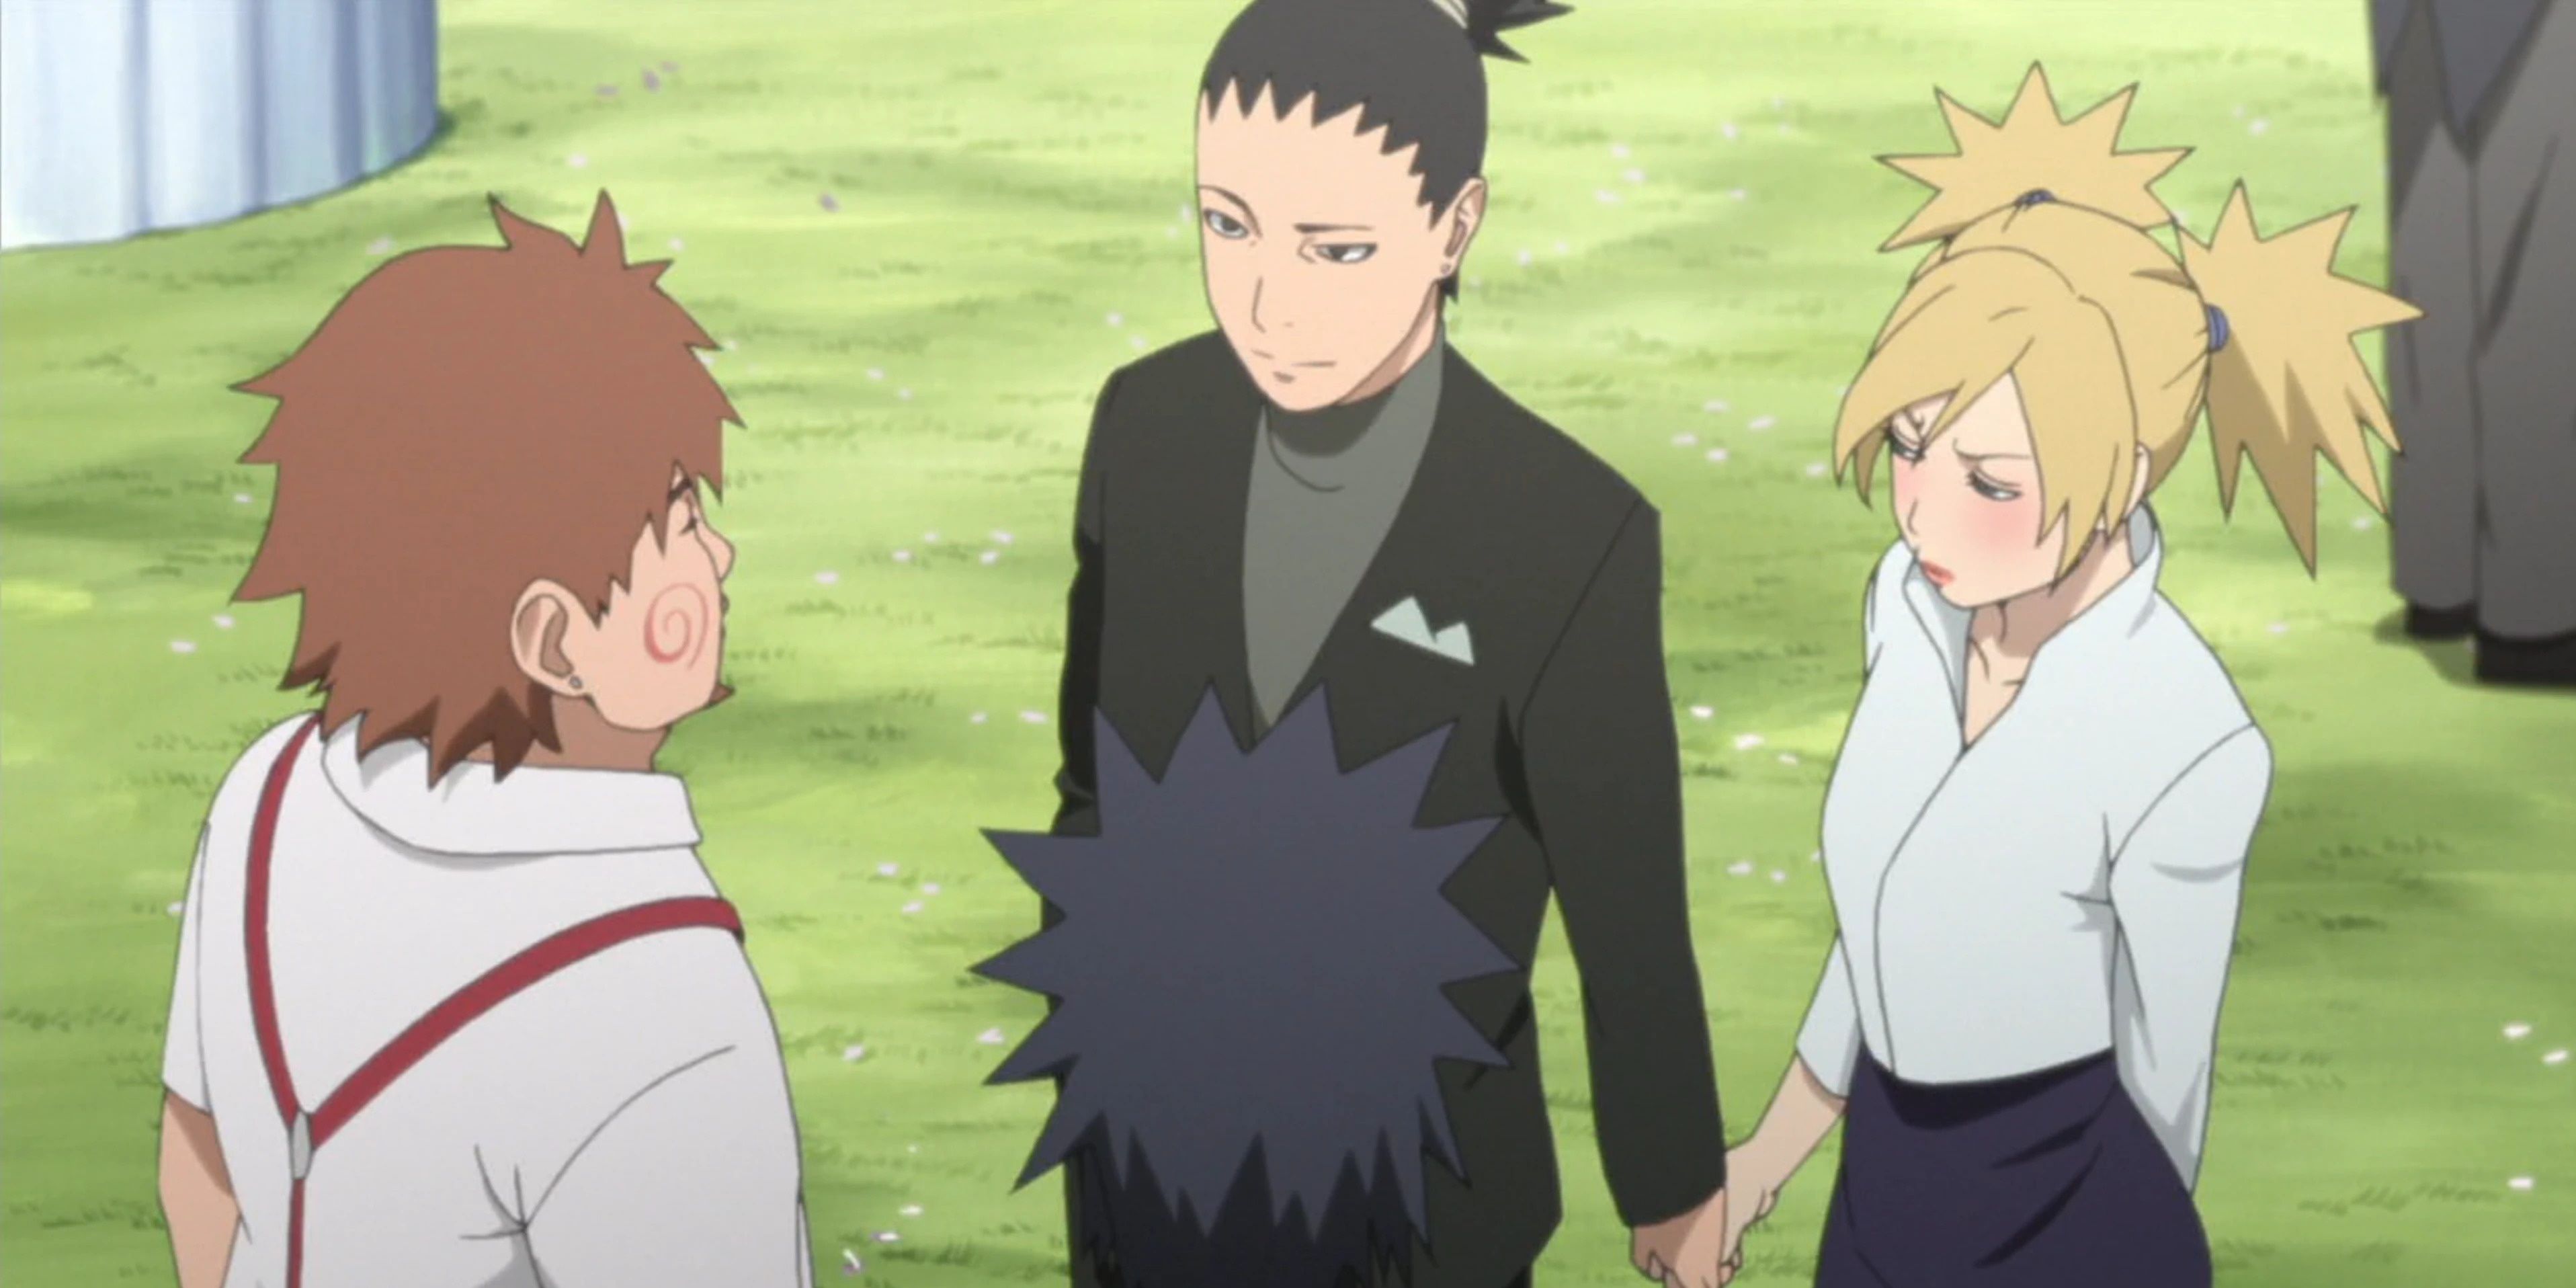 Shikamaru taking Temari as his date to Naruto's wedding